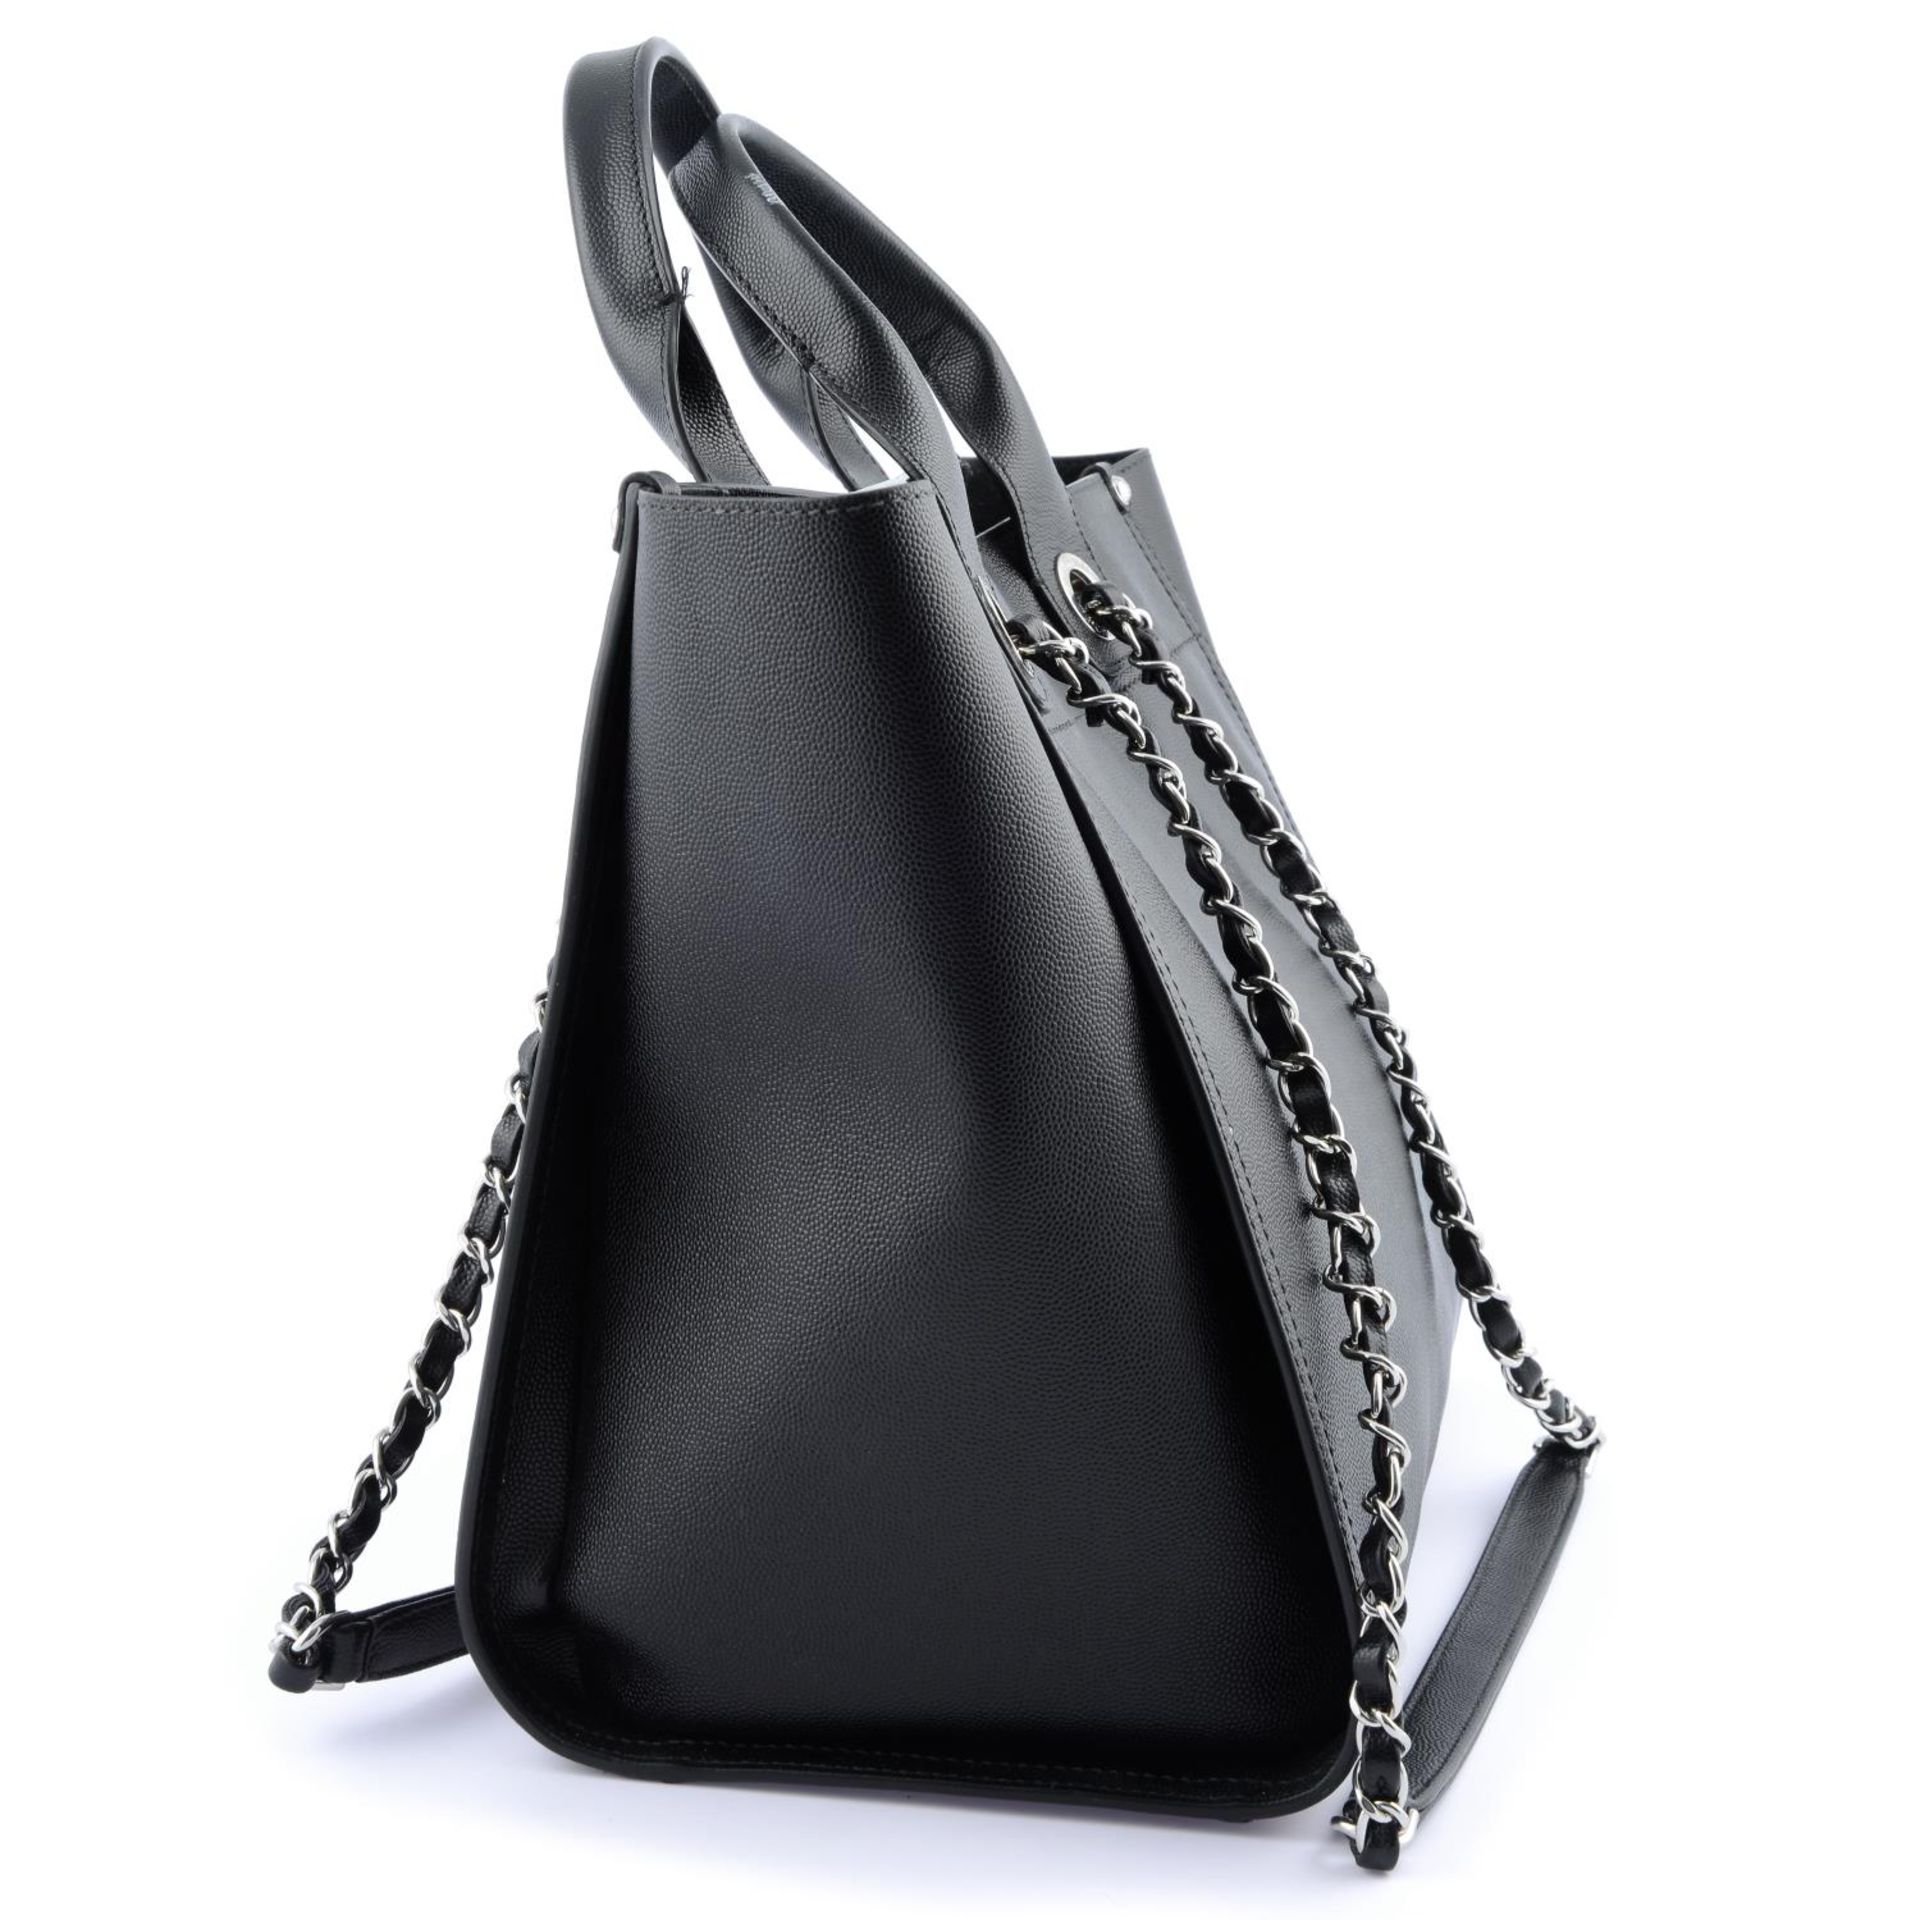 CHANEL - a black Studded Deauville Tote handbag. - Bild 3 aus 6